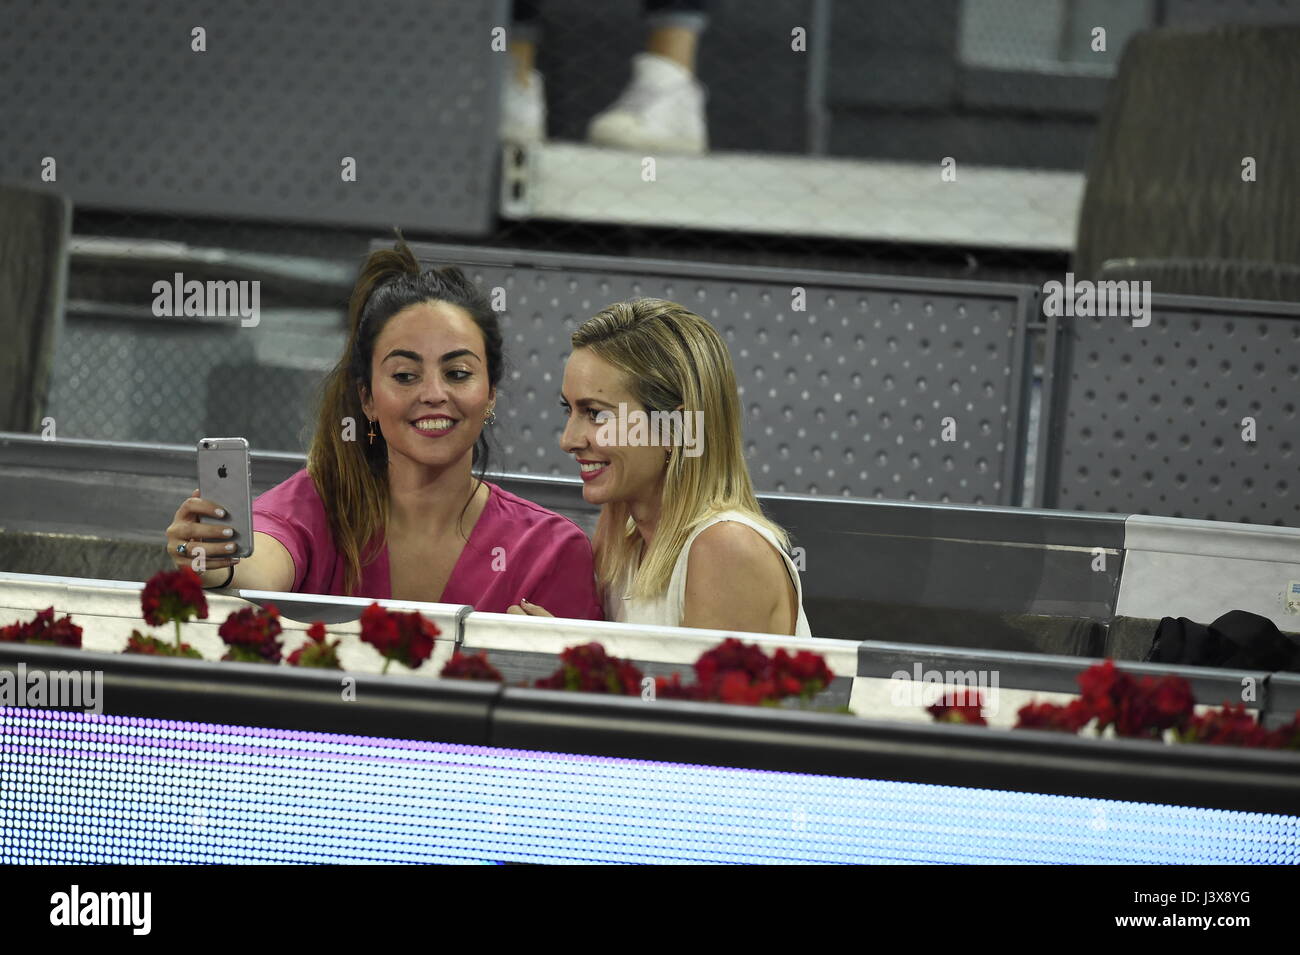 Madrid, Spagna. 8 Maggio, 2017. L'attrice Kira Miro durante il match Mutua Madrid Open a Madrid lunedì 8 maggio 2017. Credito: Gtres Información más Comuniación on line,S.L./Alamy Live News Foto Stock